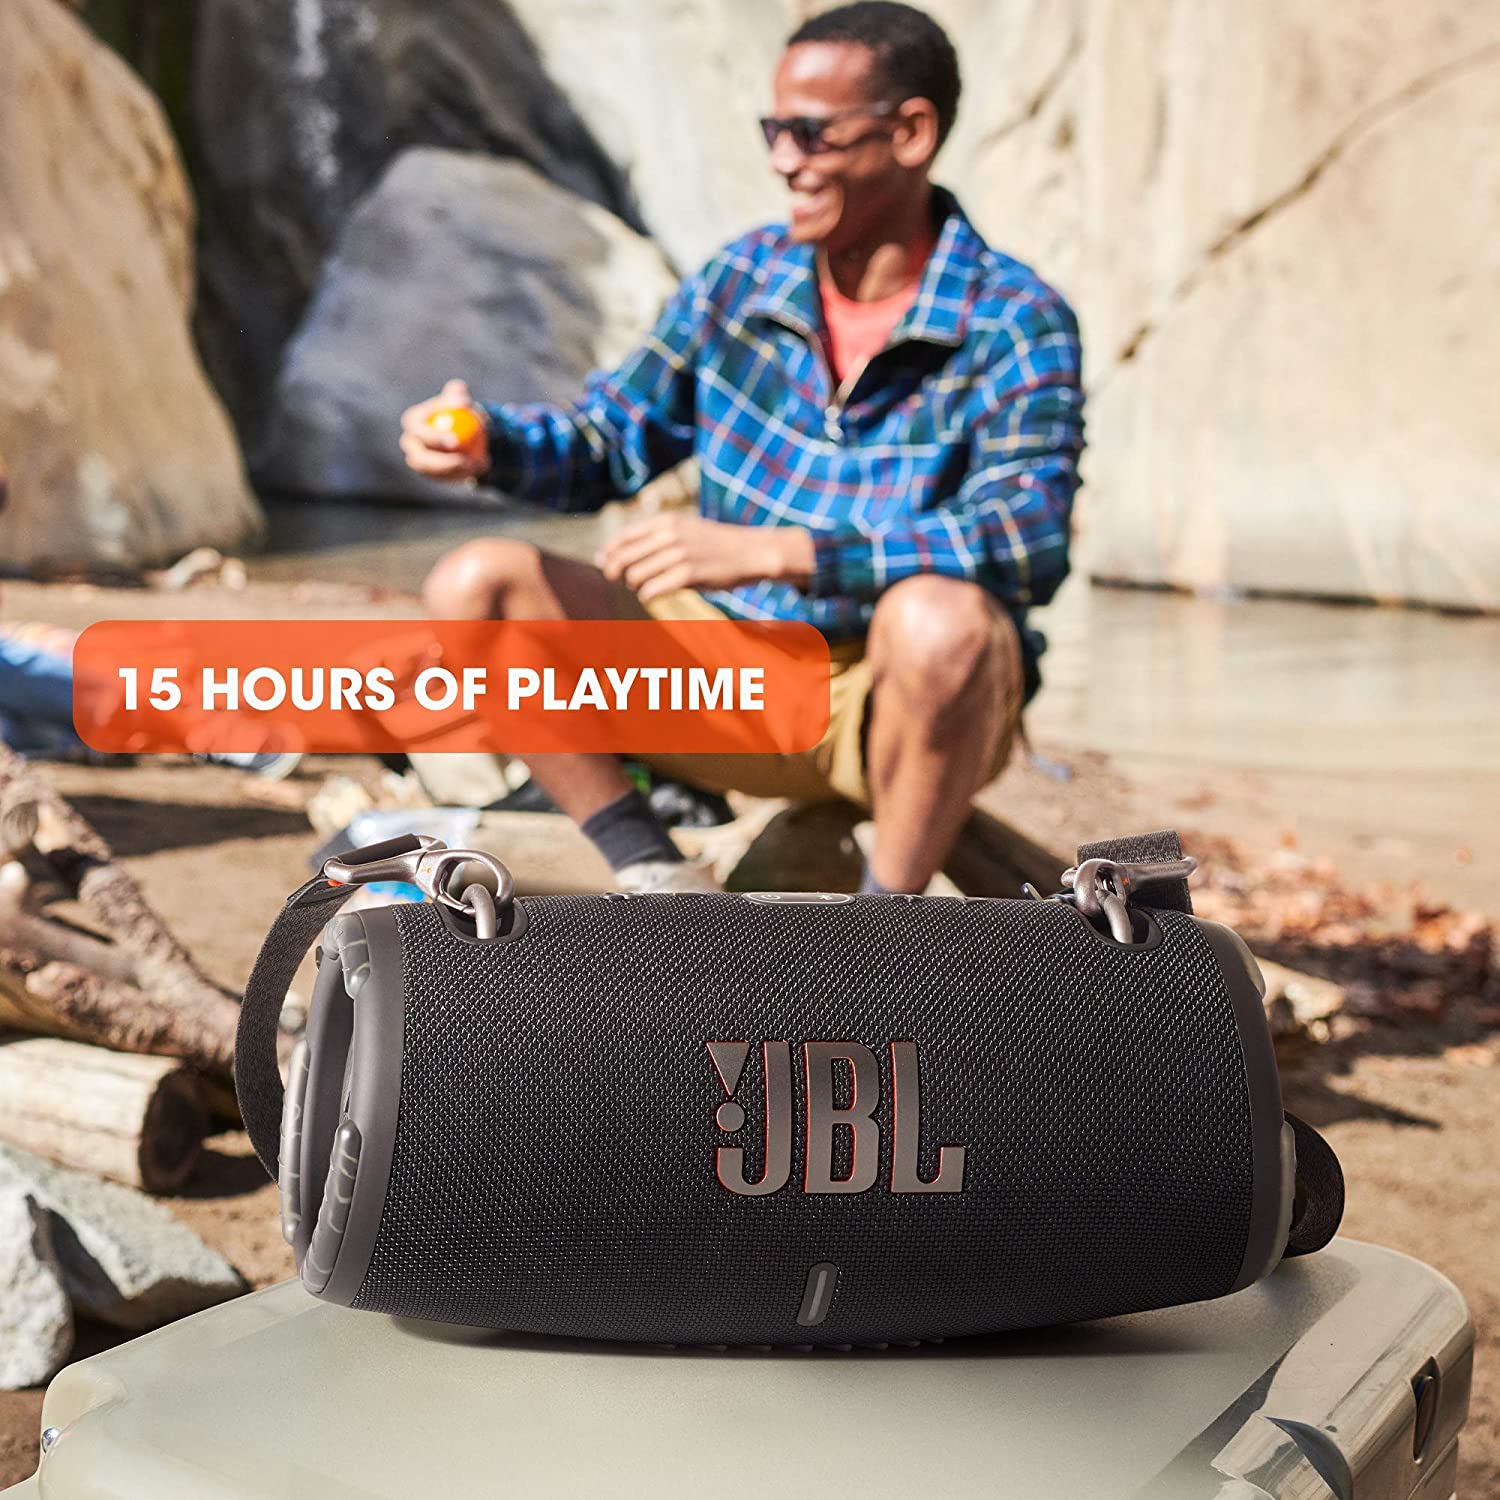 JBL JBLXTREME3BLKAM-Z Xtreme 3 Portable Waterproof Wireless Speaker, Black - Certified Refurbished